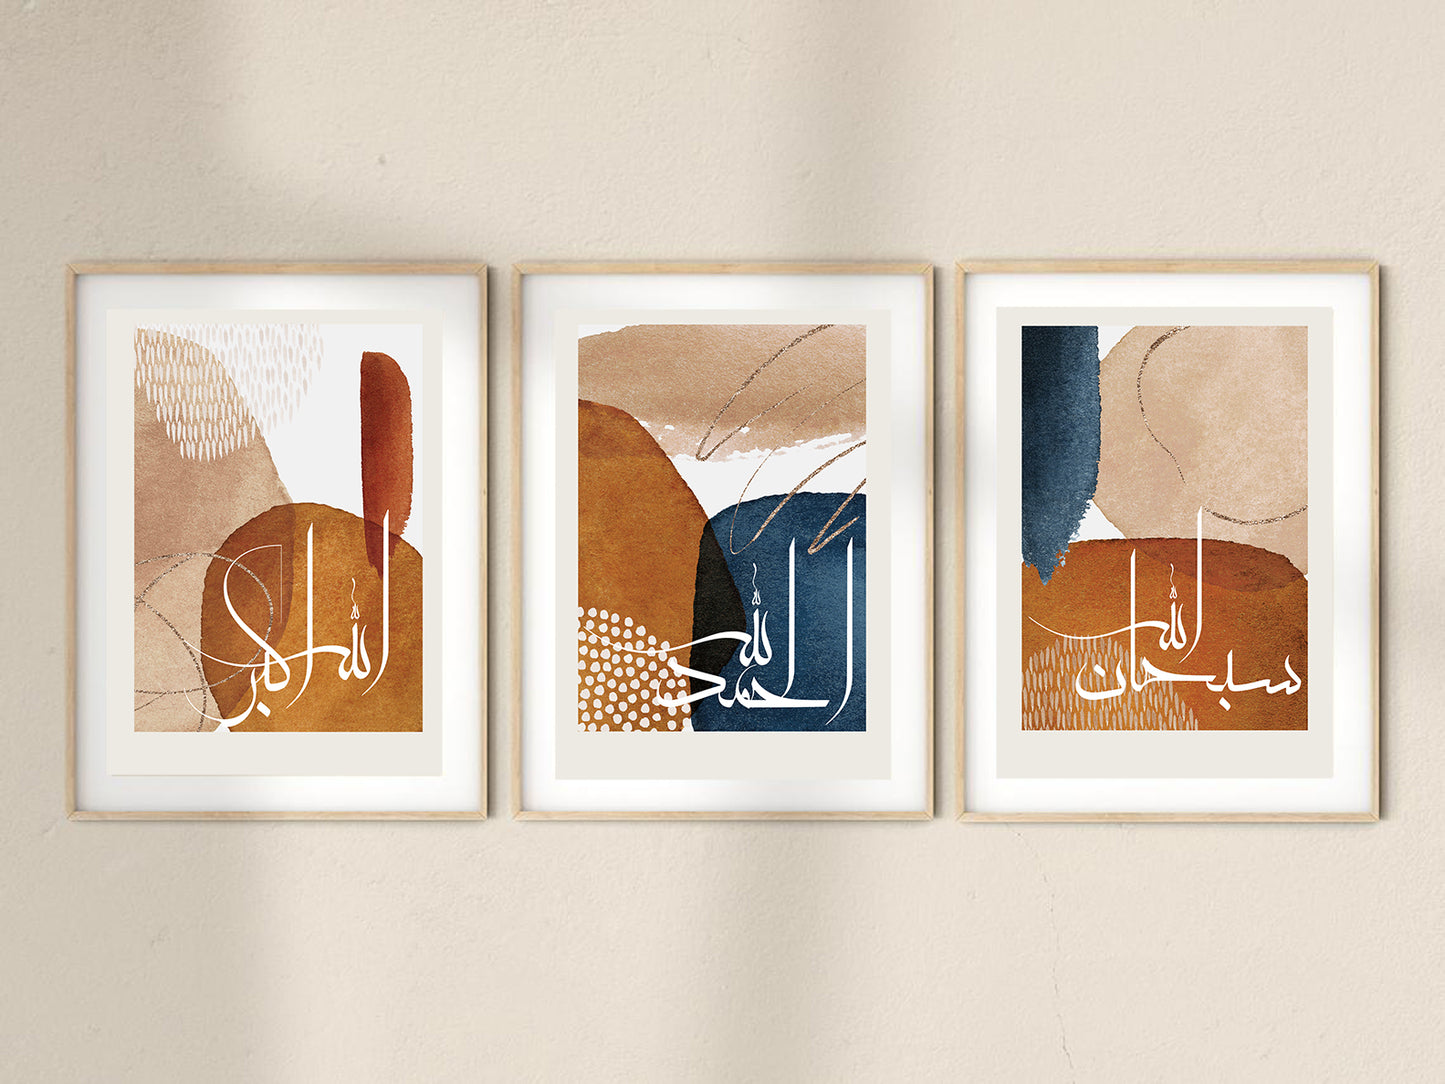 SubhanAllah Alhamdulillah AllahuAkbar Islamic wall art, Arabic Calligraphy Islamic poster for Home decors, Set of 3 Wall art for Eid gift - islamicwalldecors